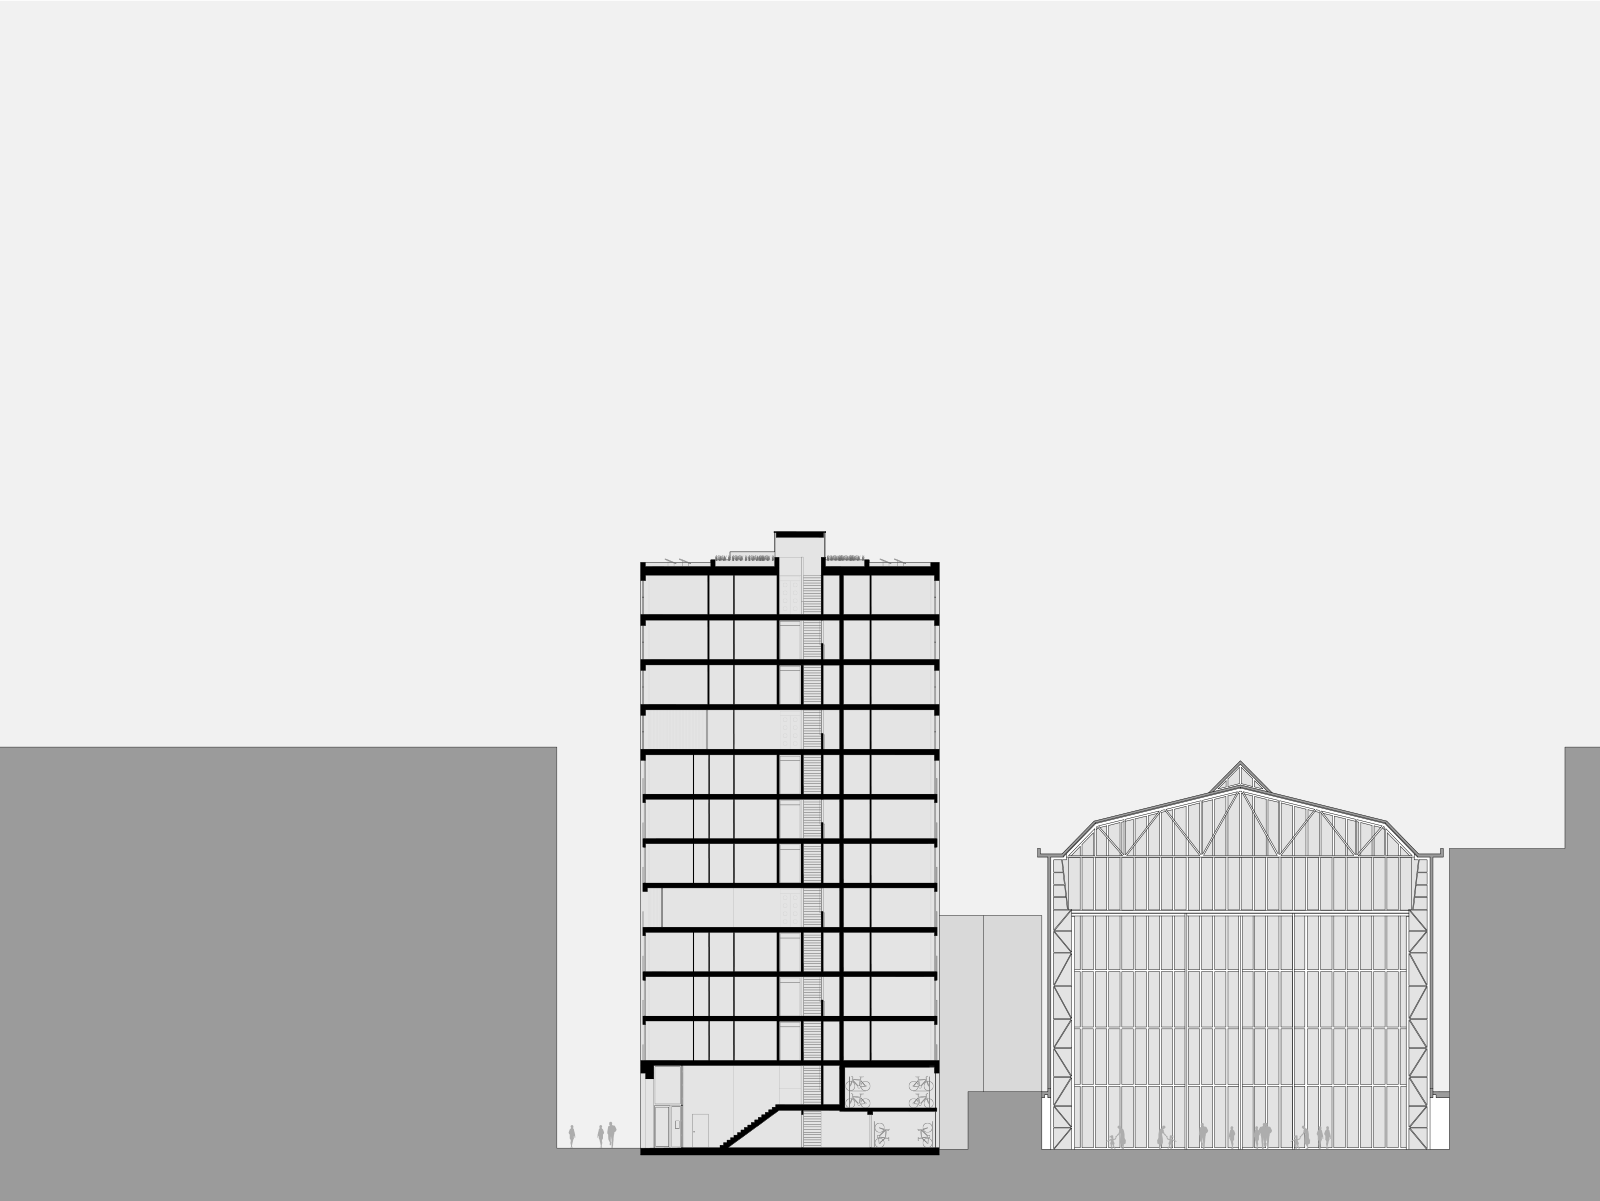 drawing cross section Oostenburg apartment block by beta architect amsterdam evert klinkenberg gus auguste van oppen